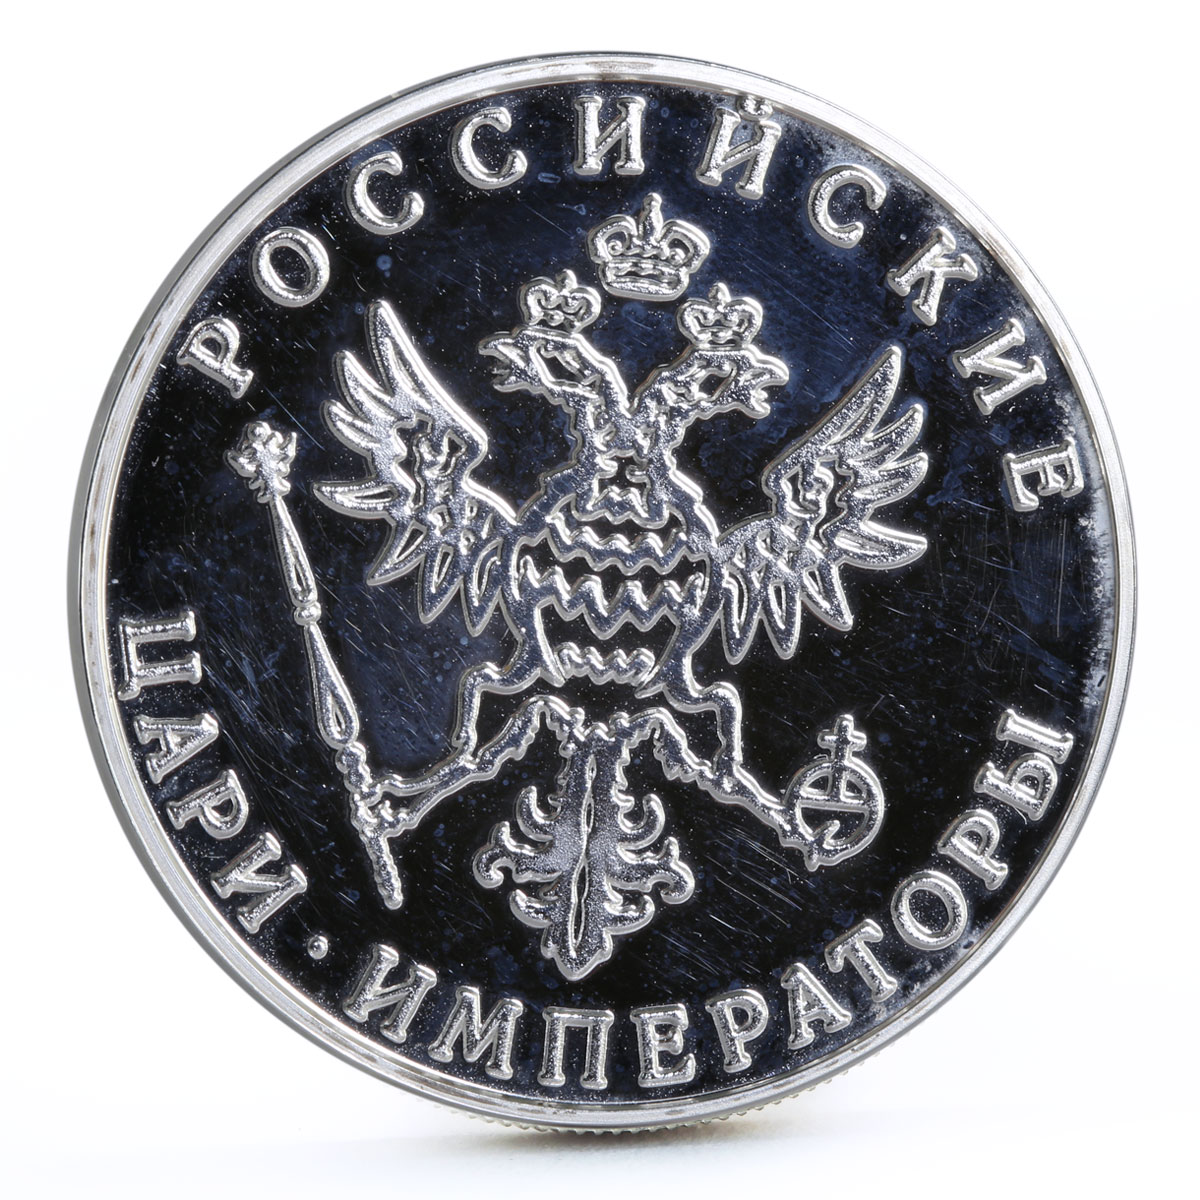 Russia Russian Tsars series Ioann Alexeevich proof silver medal